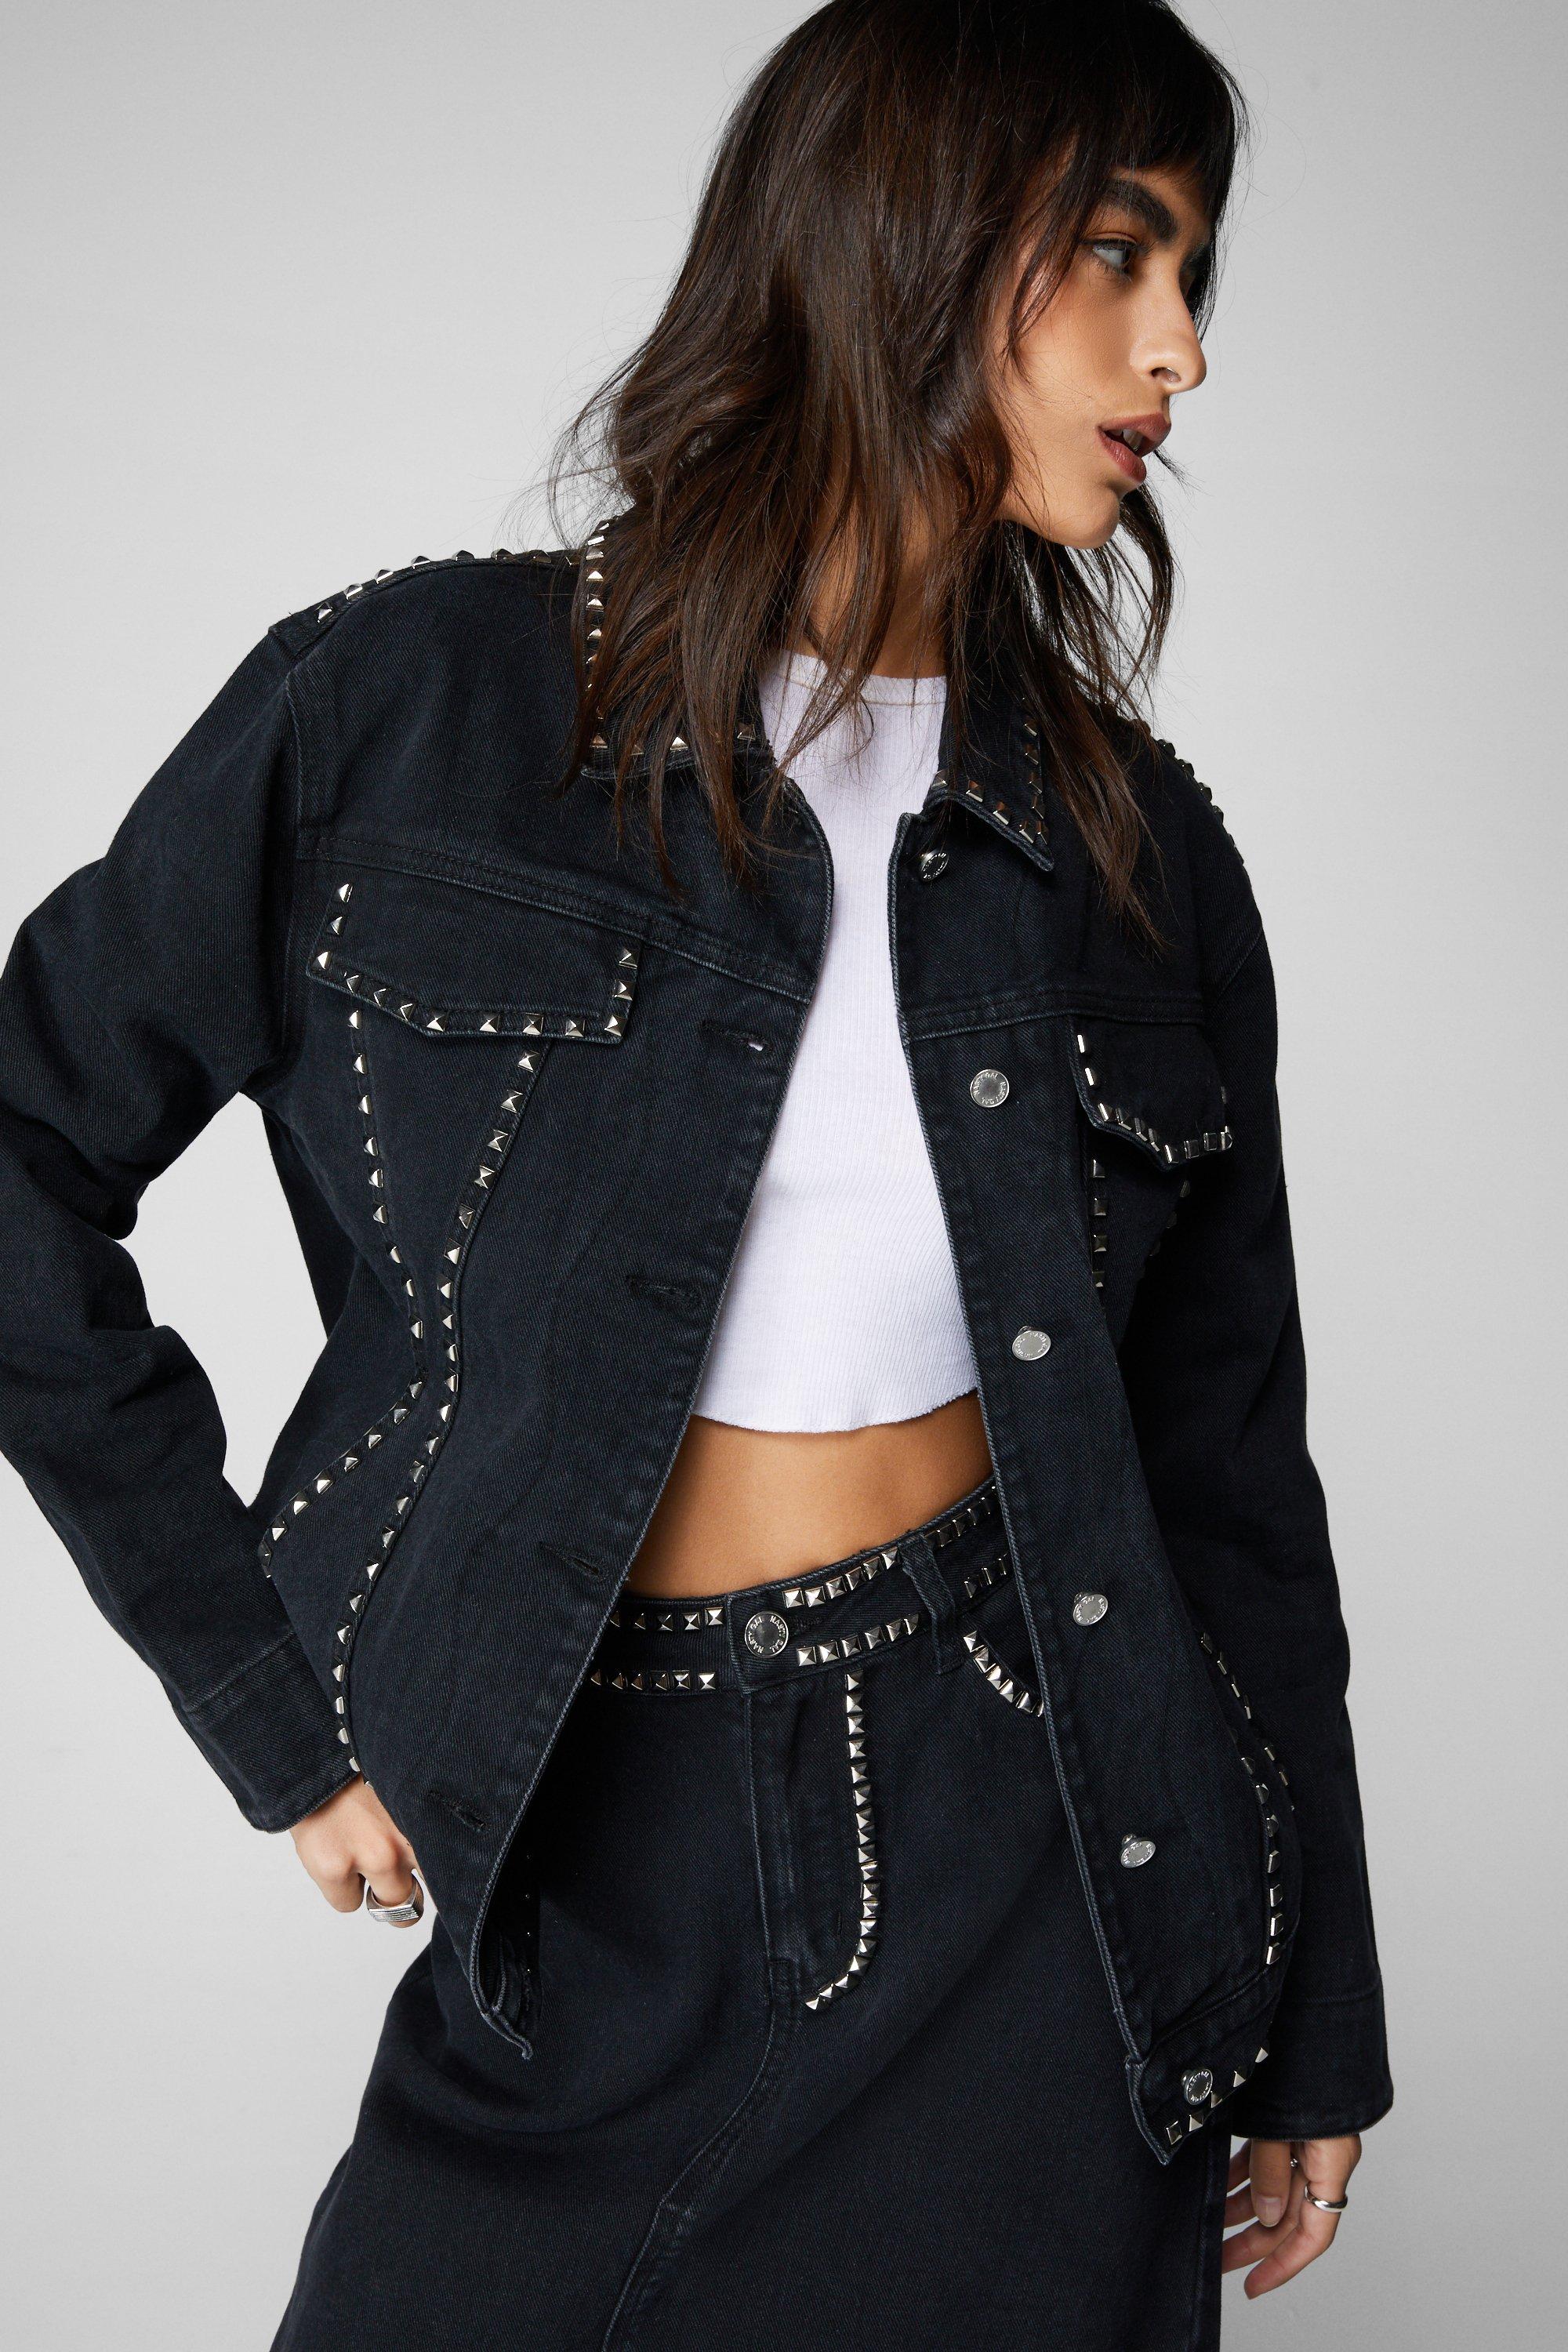 Studded denim jacket, thoughts? : r/streetwearstartup